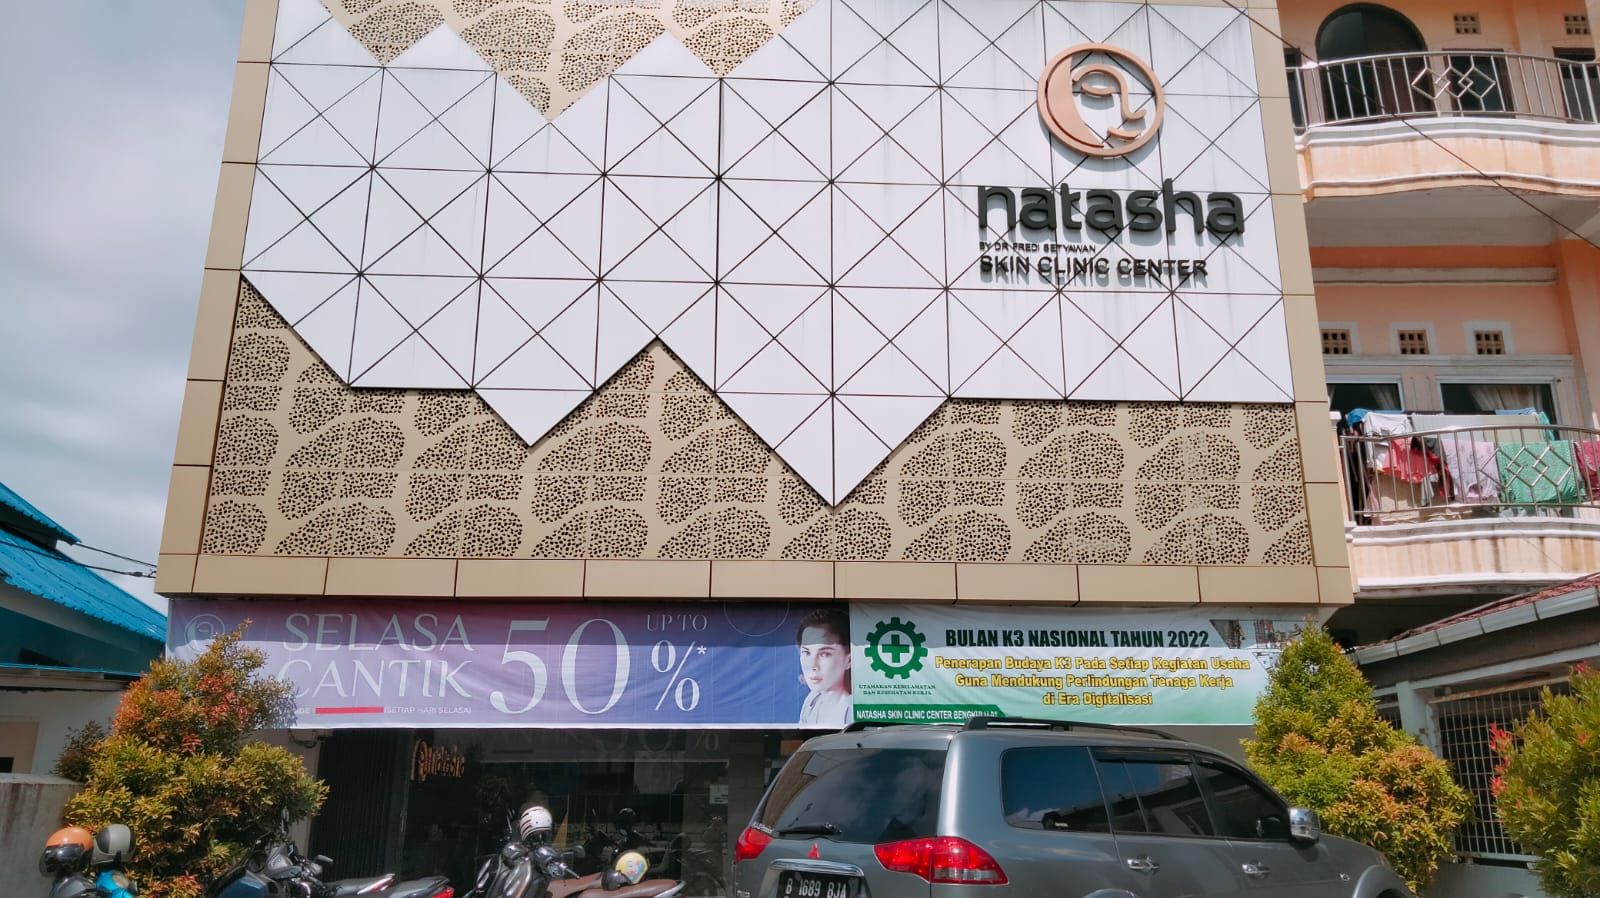 Natasha, Klinik Kecantikan dengan Brand Sendiri